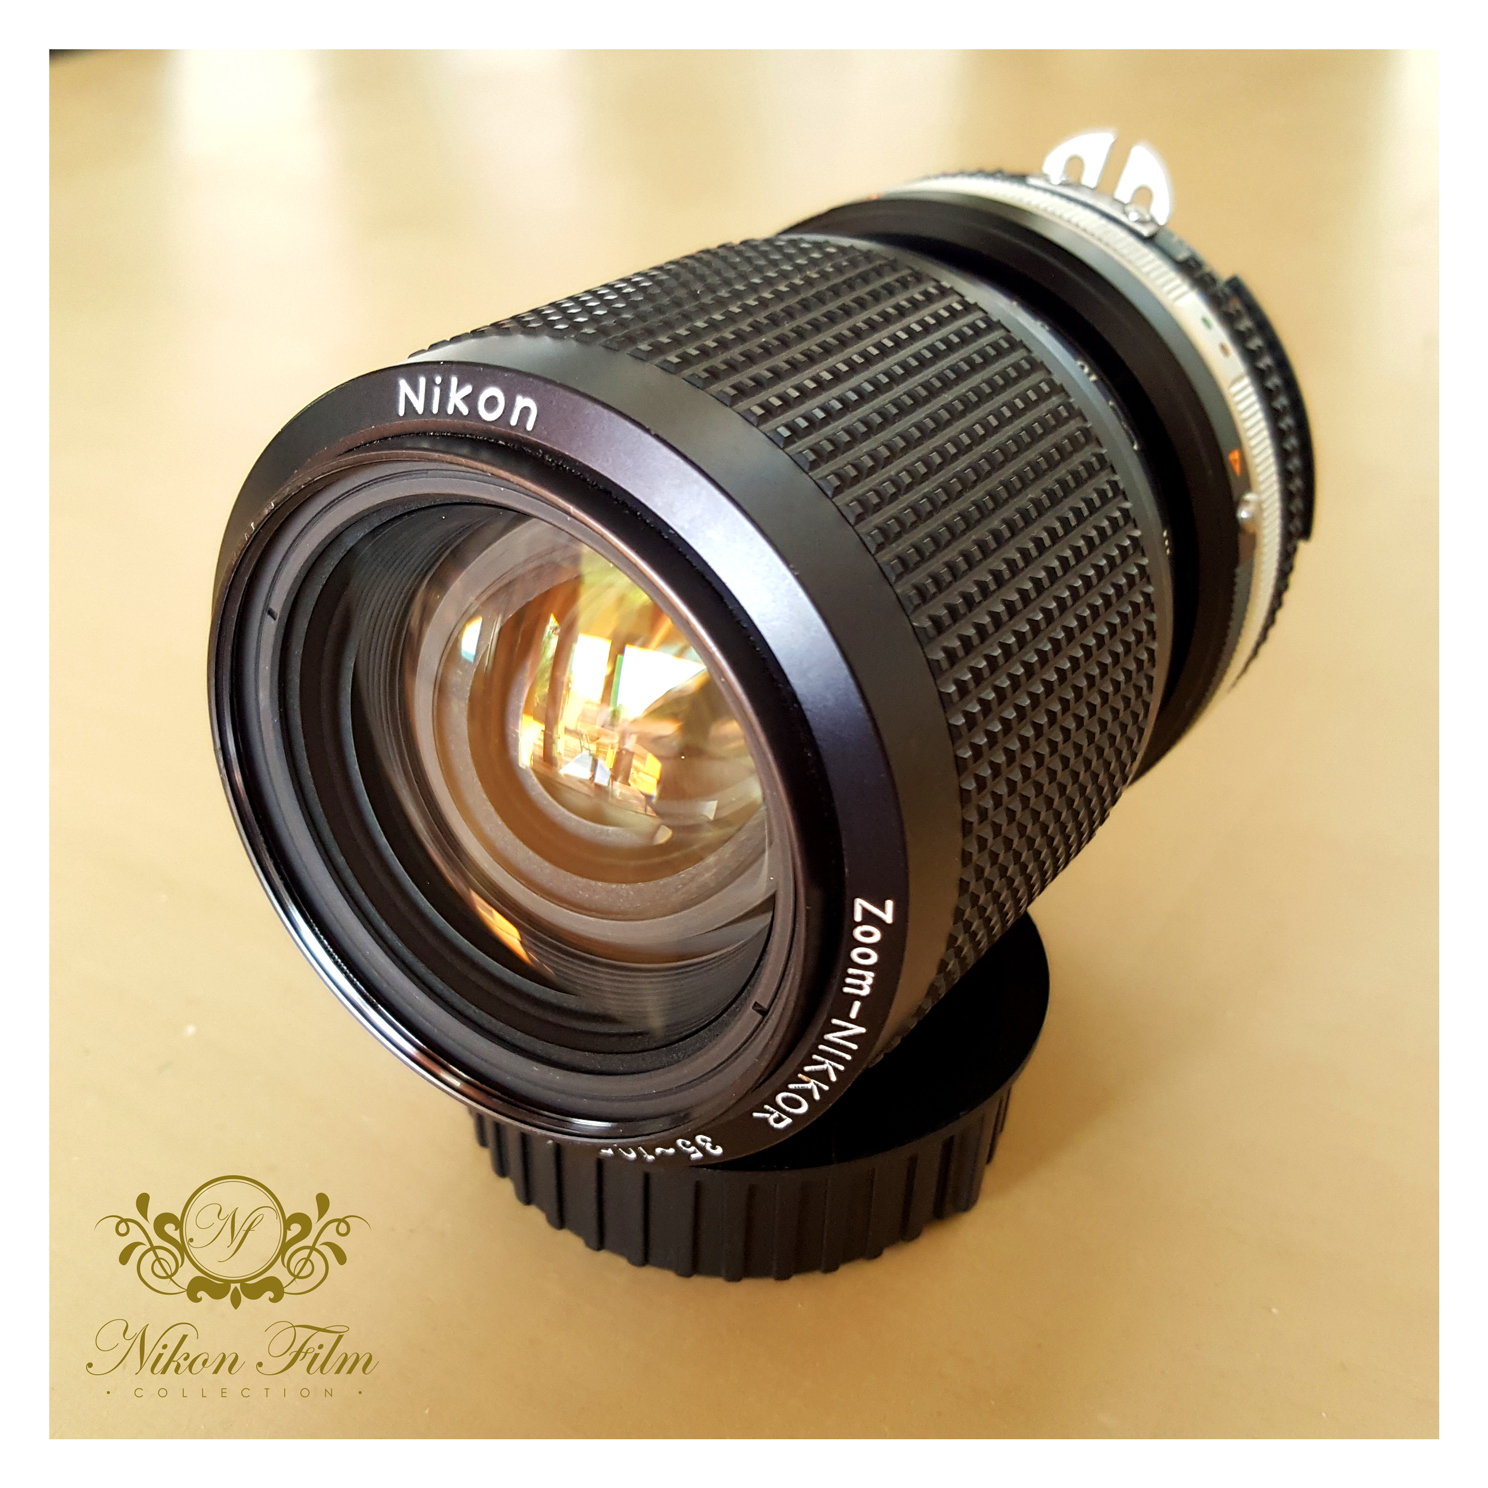 Nikon Zoom-Nikkor 35-105mm F/3.5-4.5 AiS - NIKON-FILM